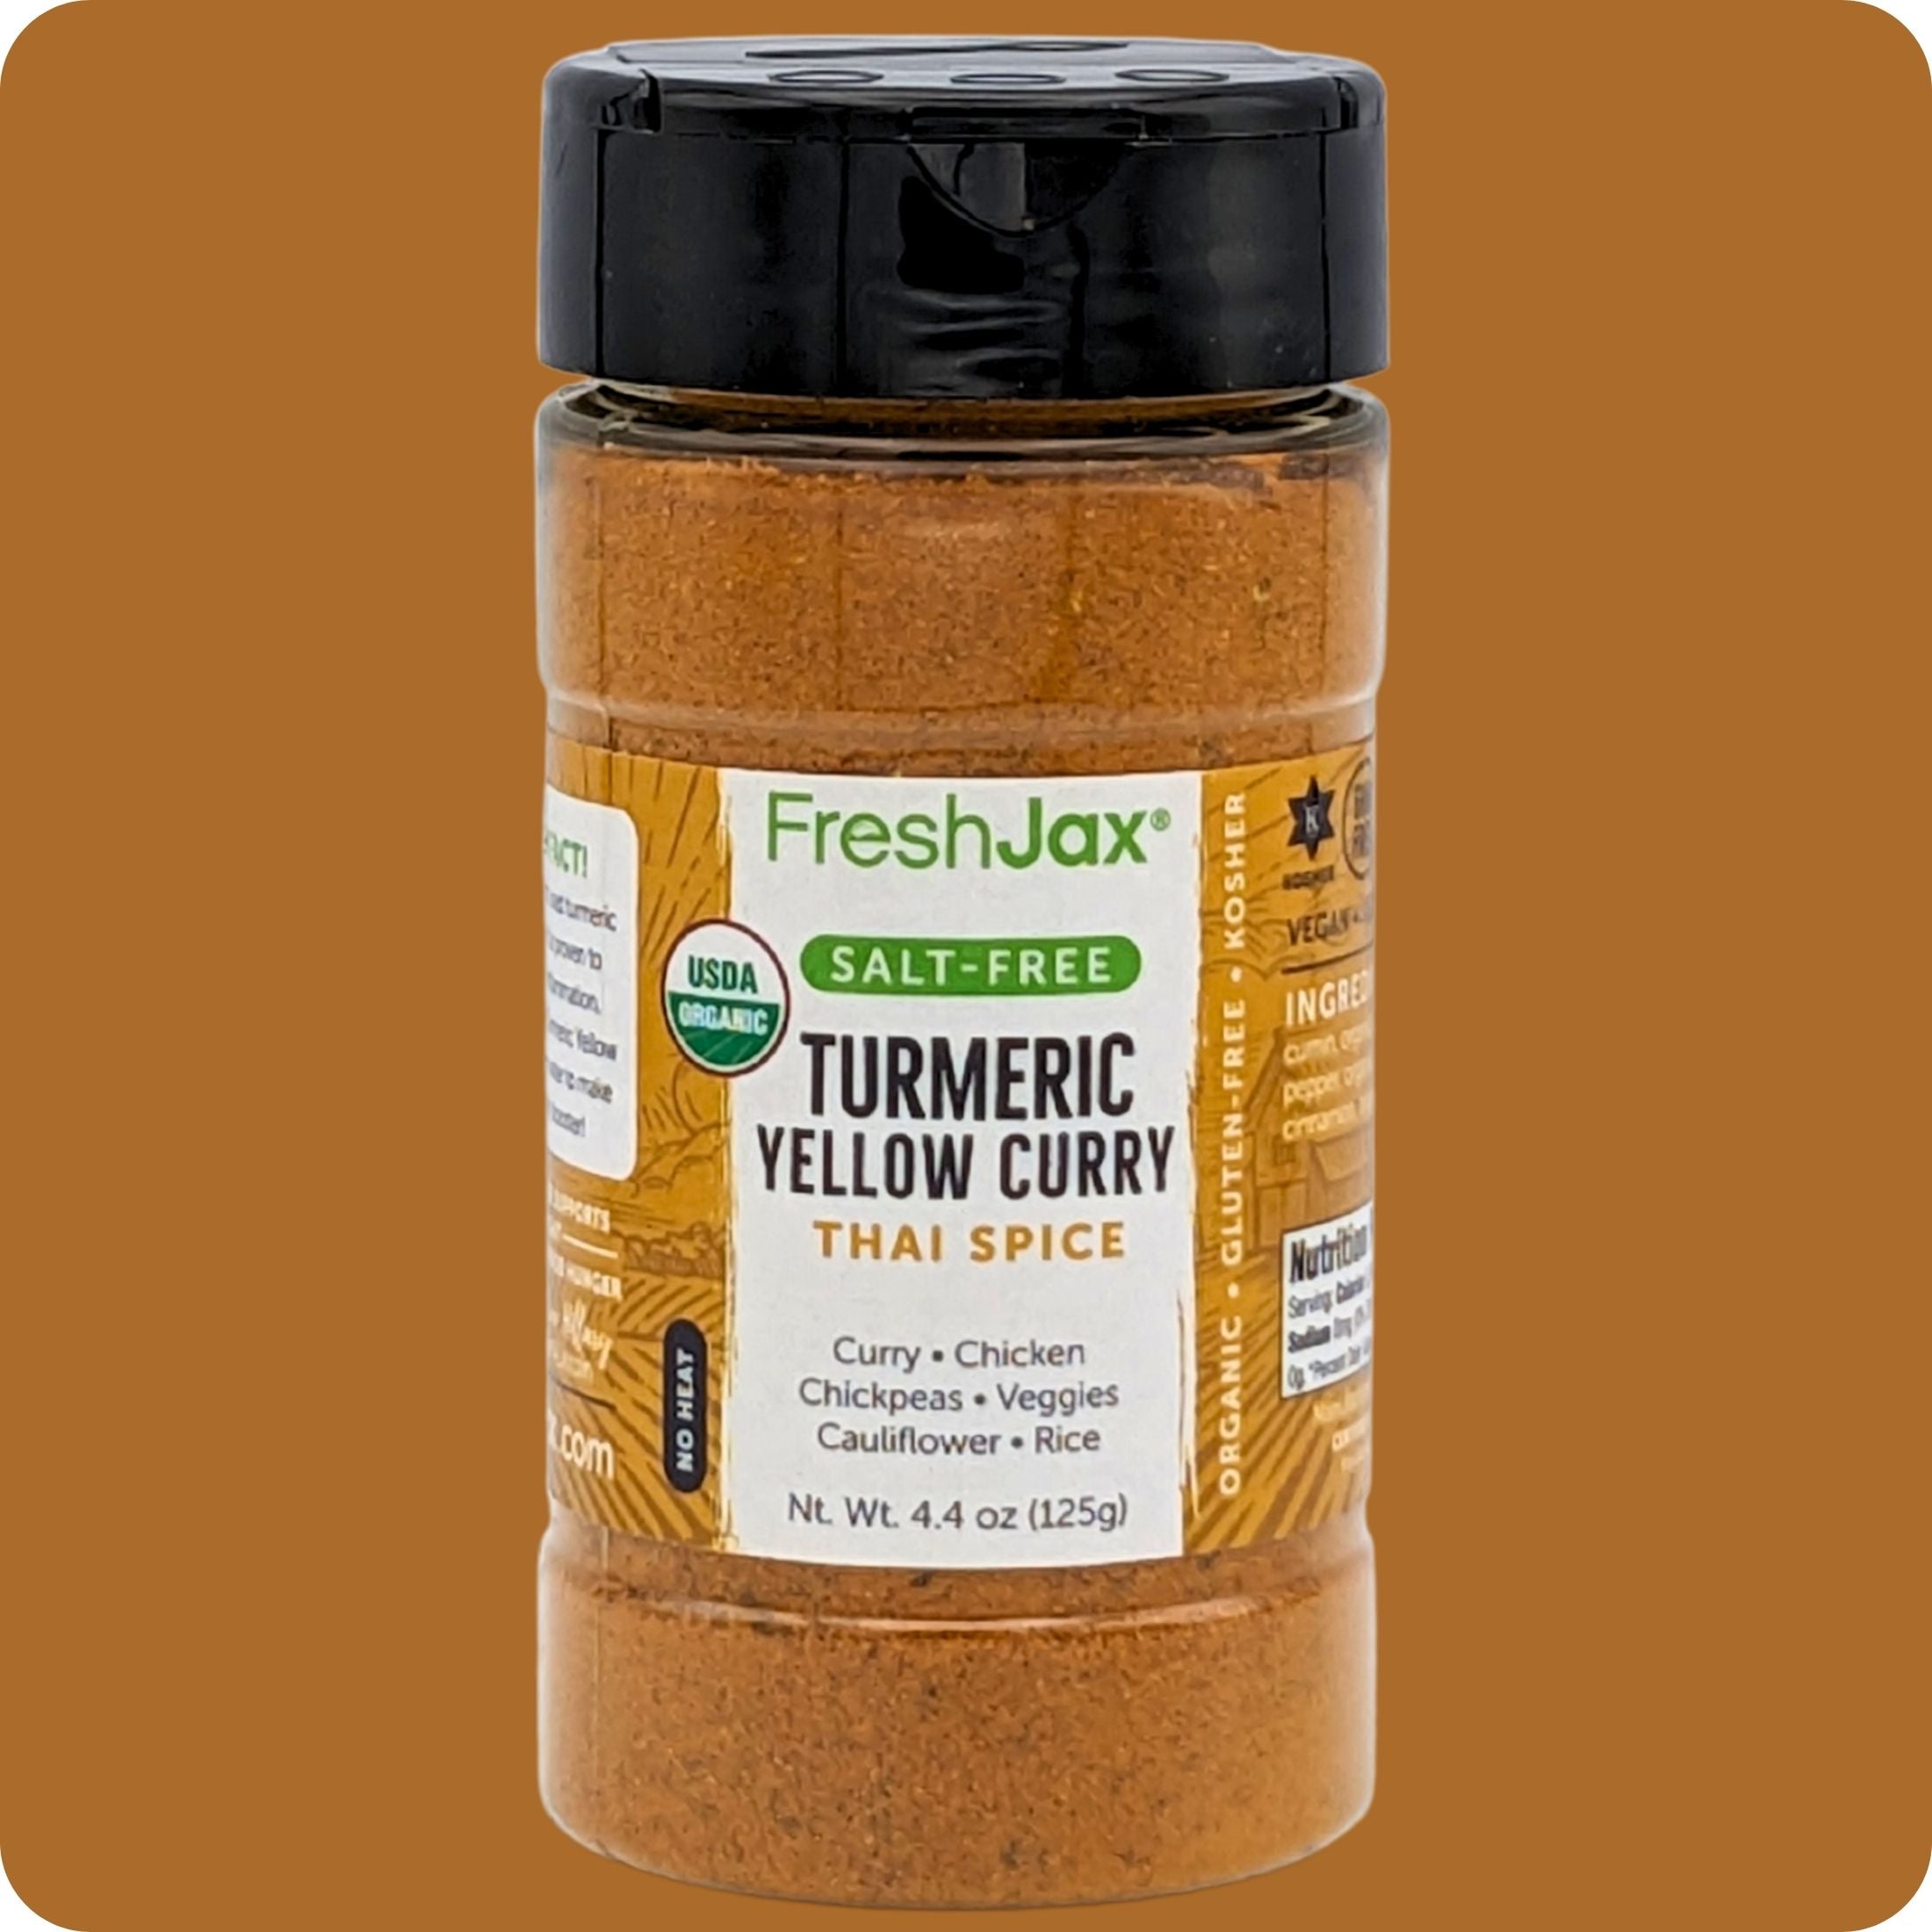 FreshJax Organic Spices Salt-Free Turmeric Yellow Curry Thai Spice